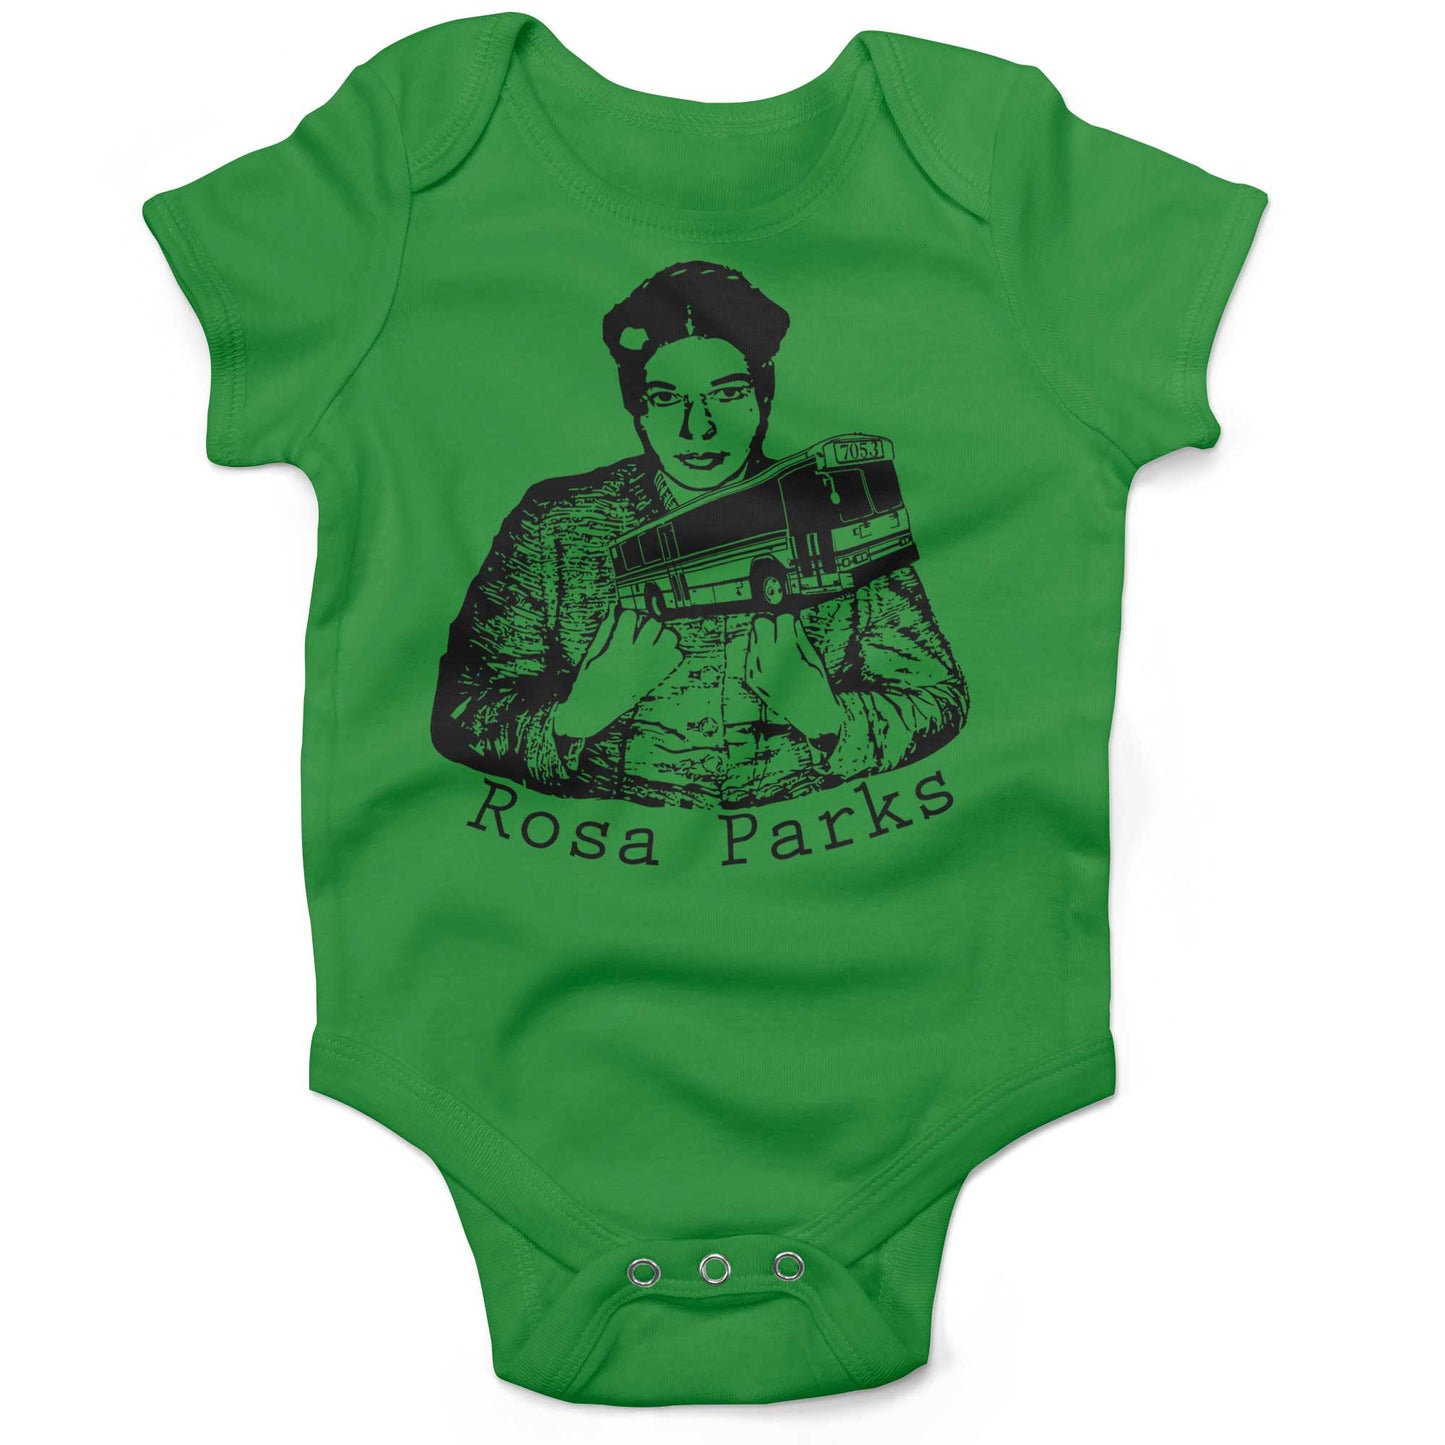 Rosa Parks Infant Bodysuit or Raglan Baby Tee-Grass Green-3-6 months